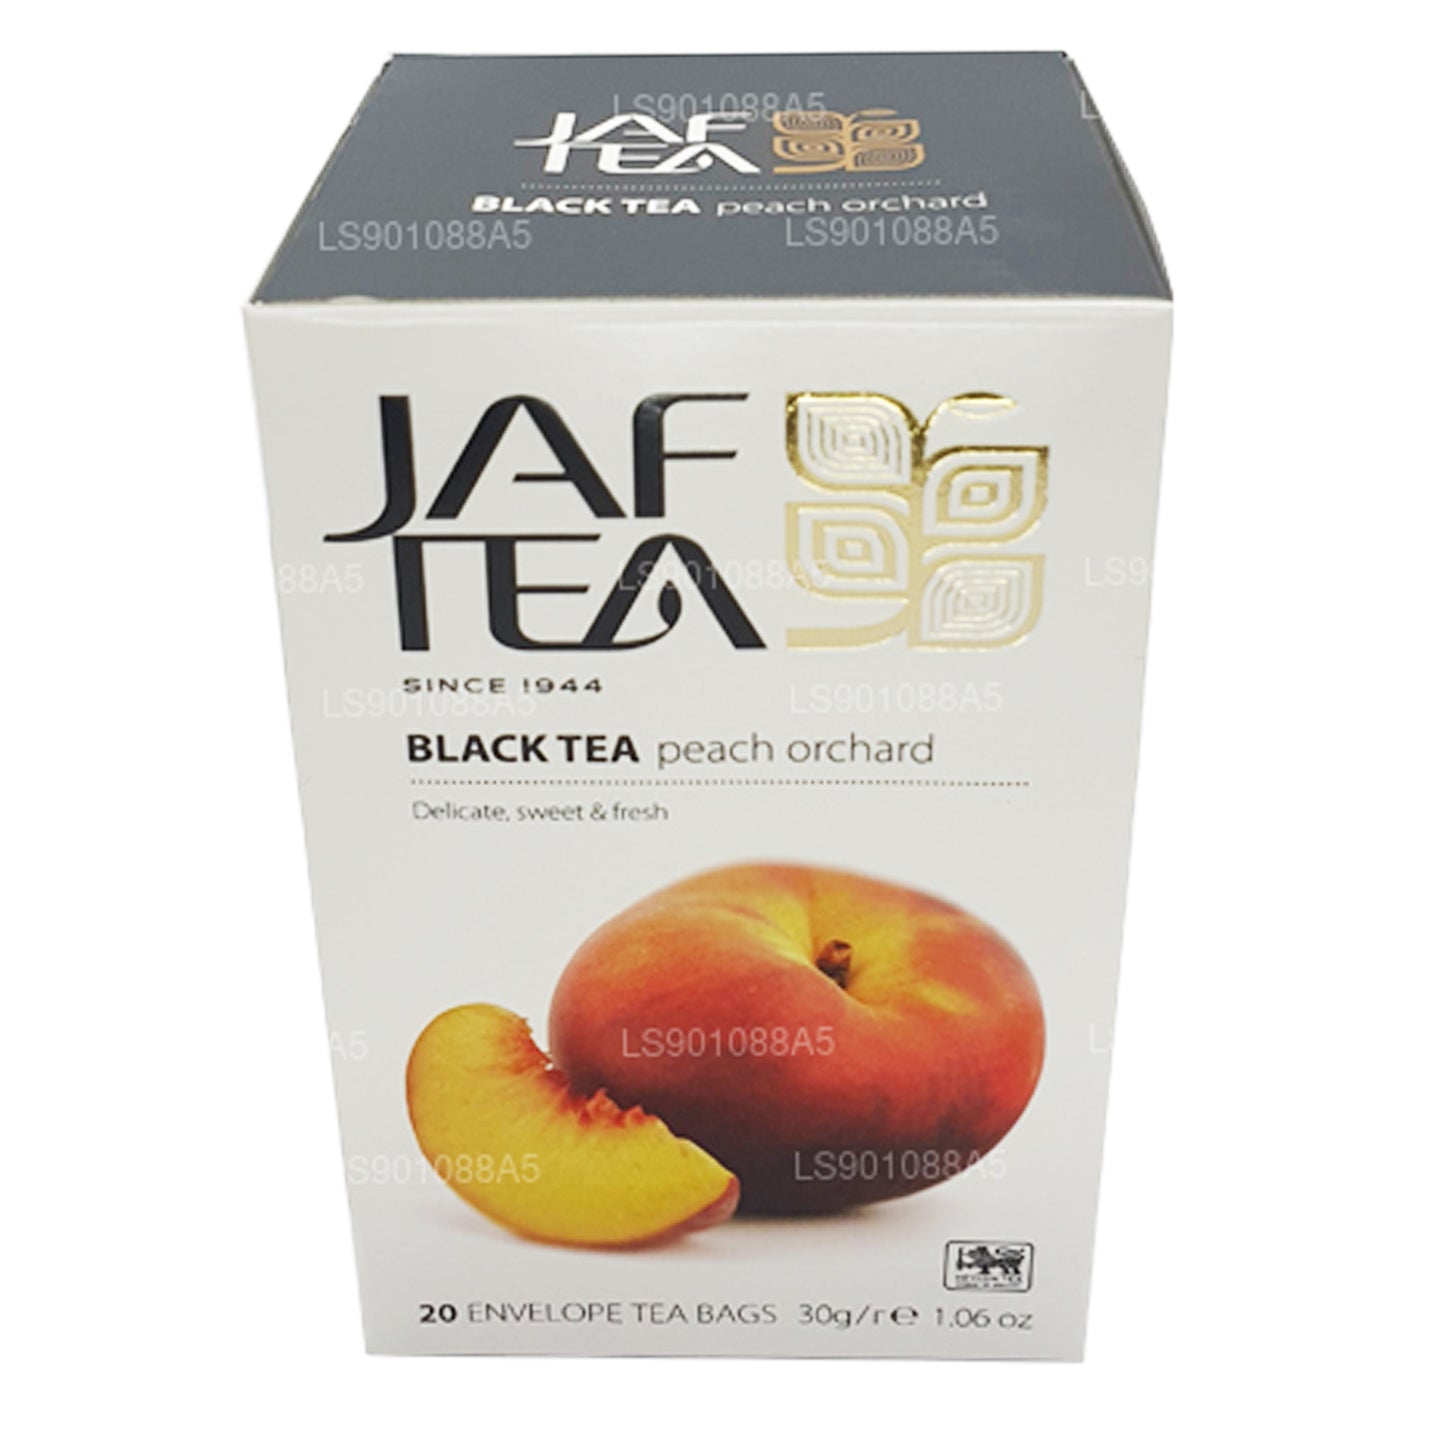 Jaf Tea Pure Fruits Collection Siyah Çay Şeftali Bahçesi (30g) 20 Çay Poşeti